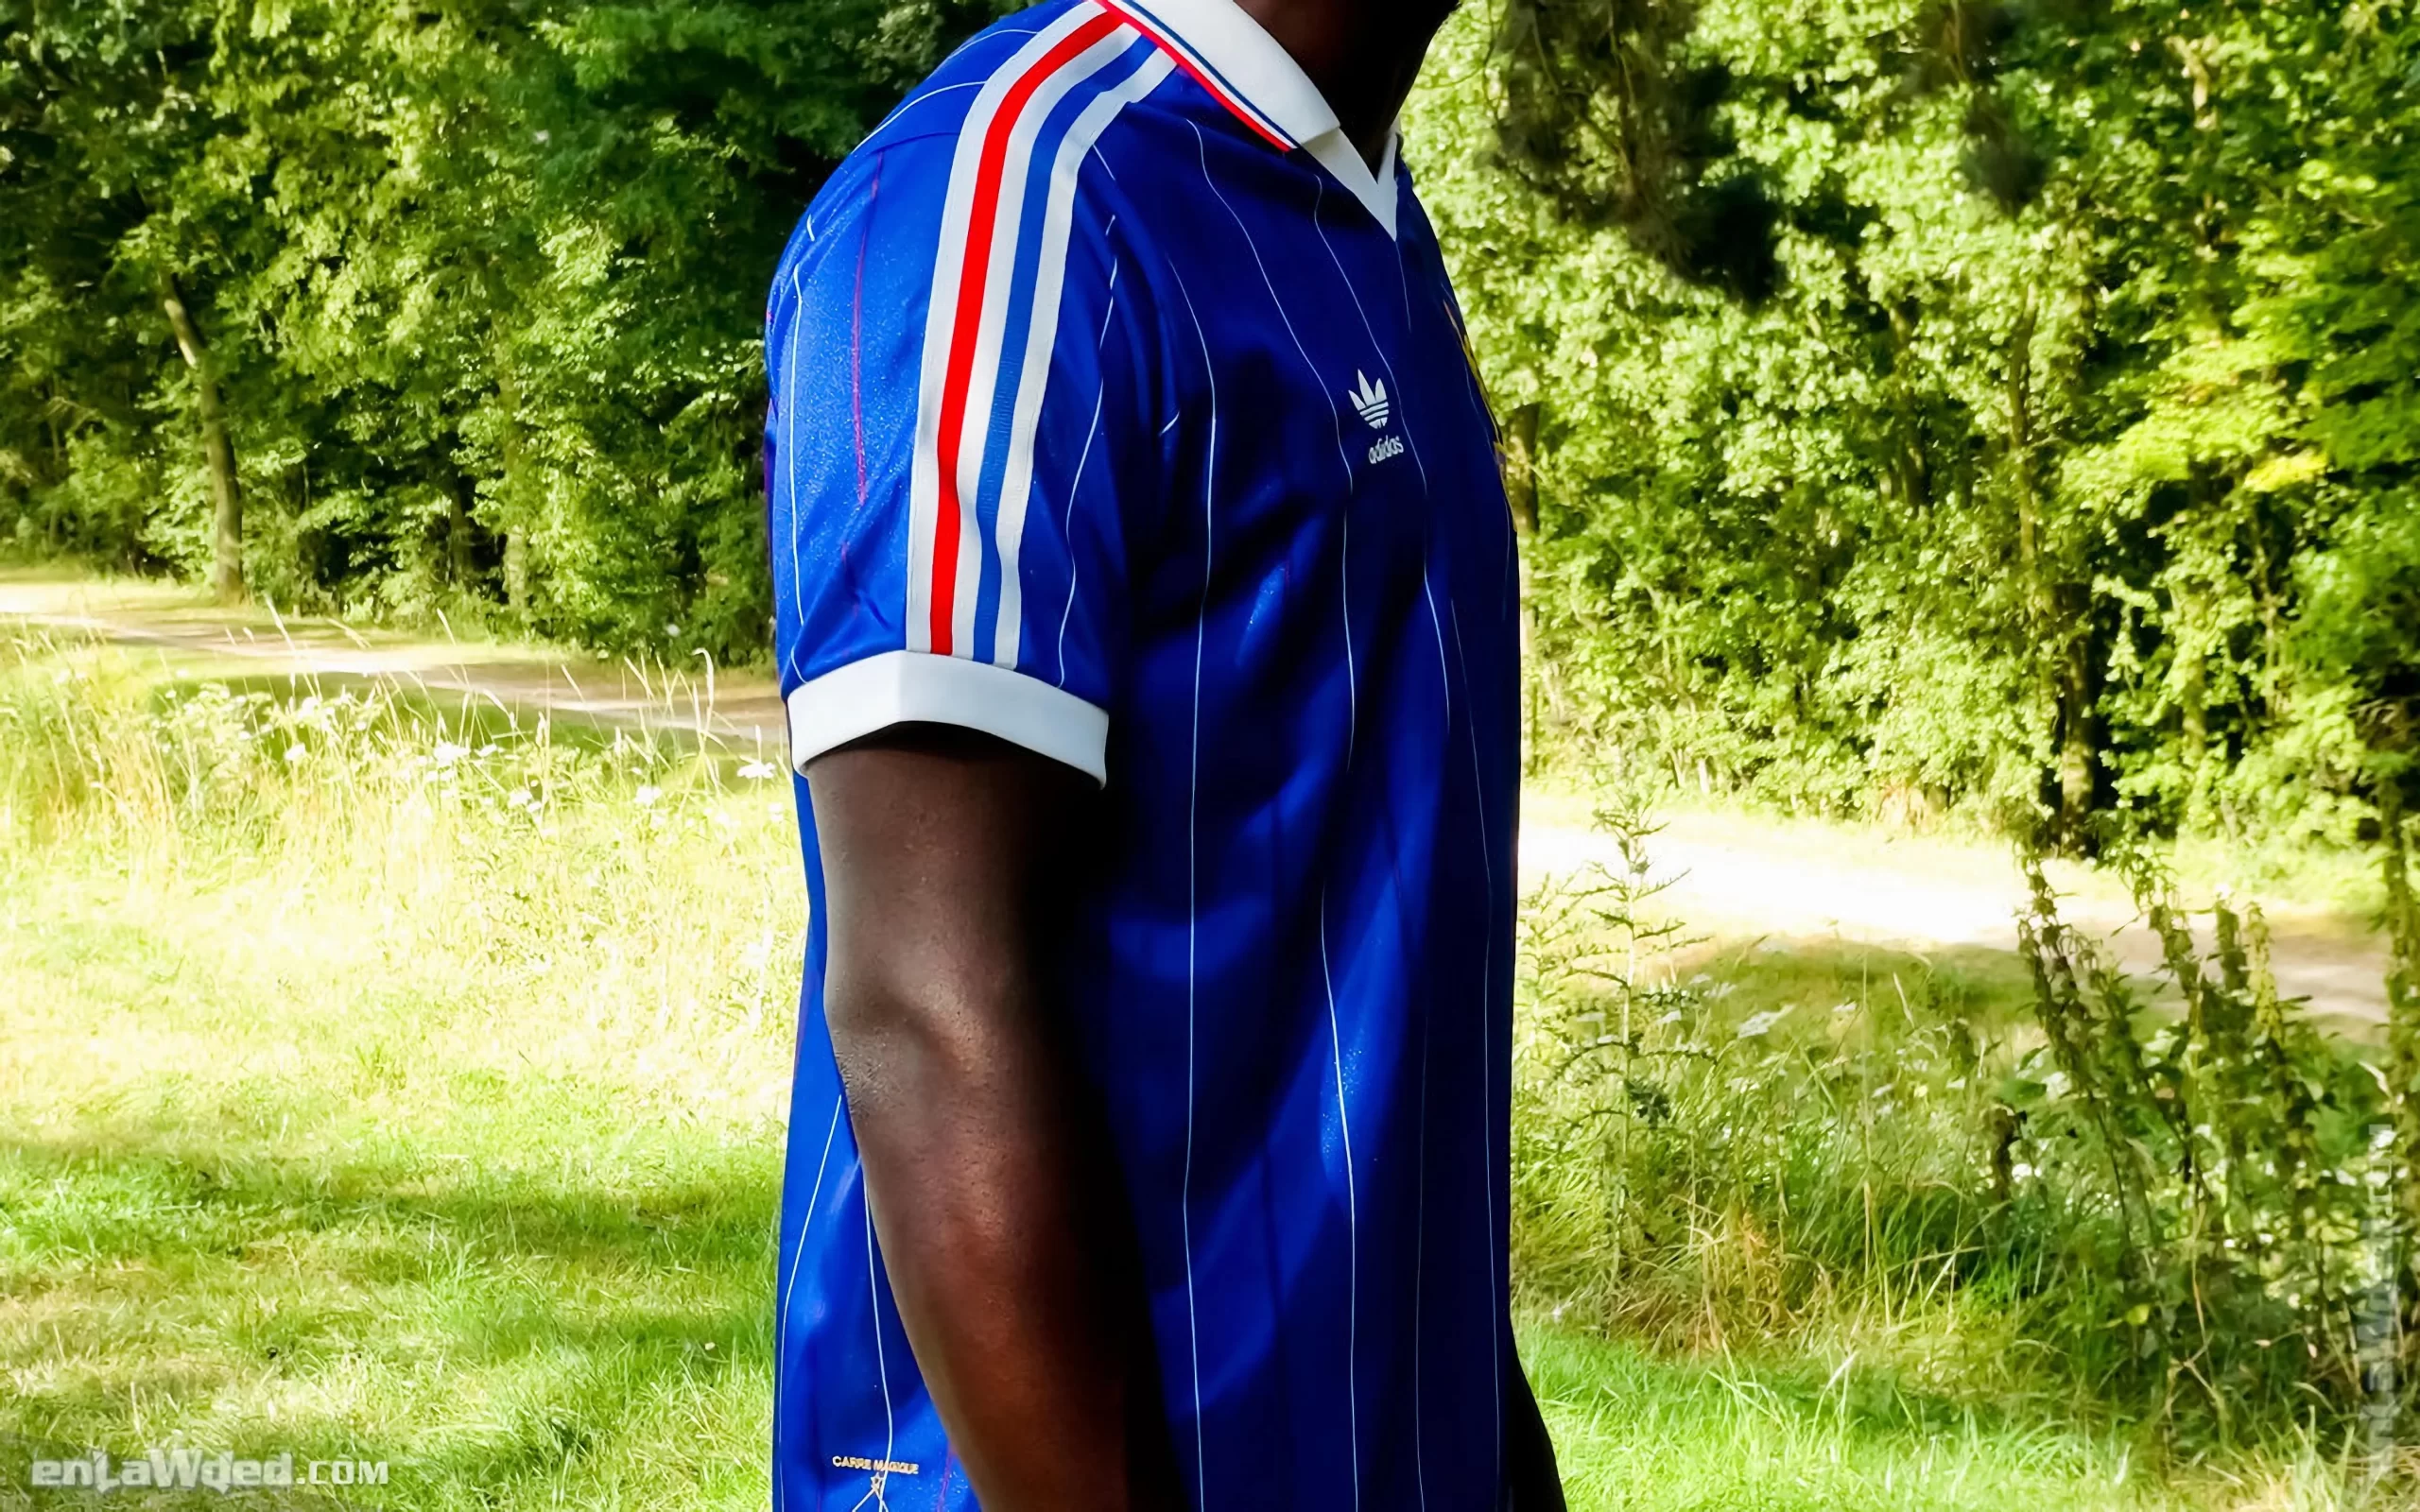 Men’s 2005 France ’82 Carre Magique Jersey by Adidas: Devoted (EnLawded.com file #lmchk90385ip2y122987kg9st)